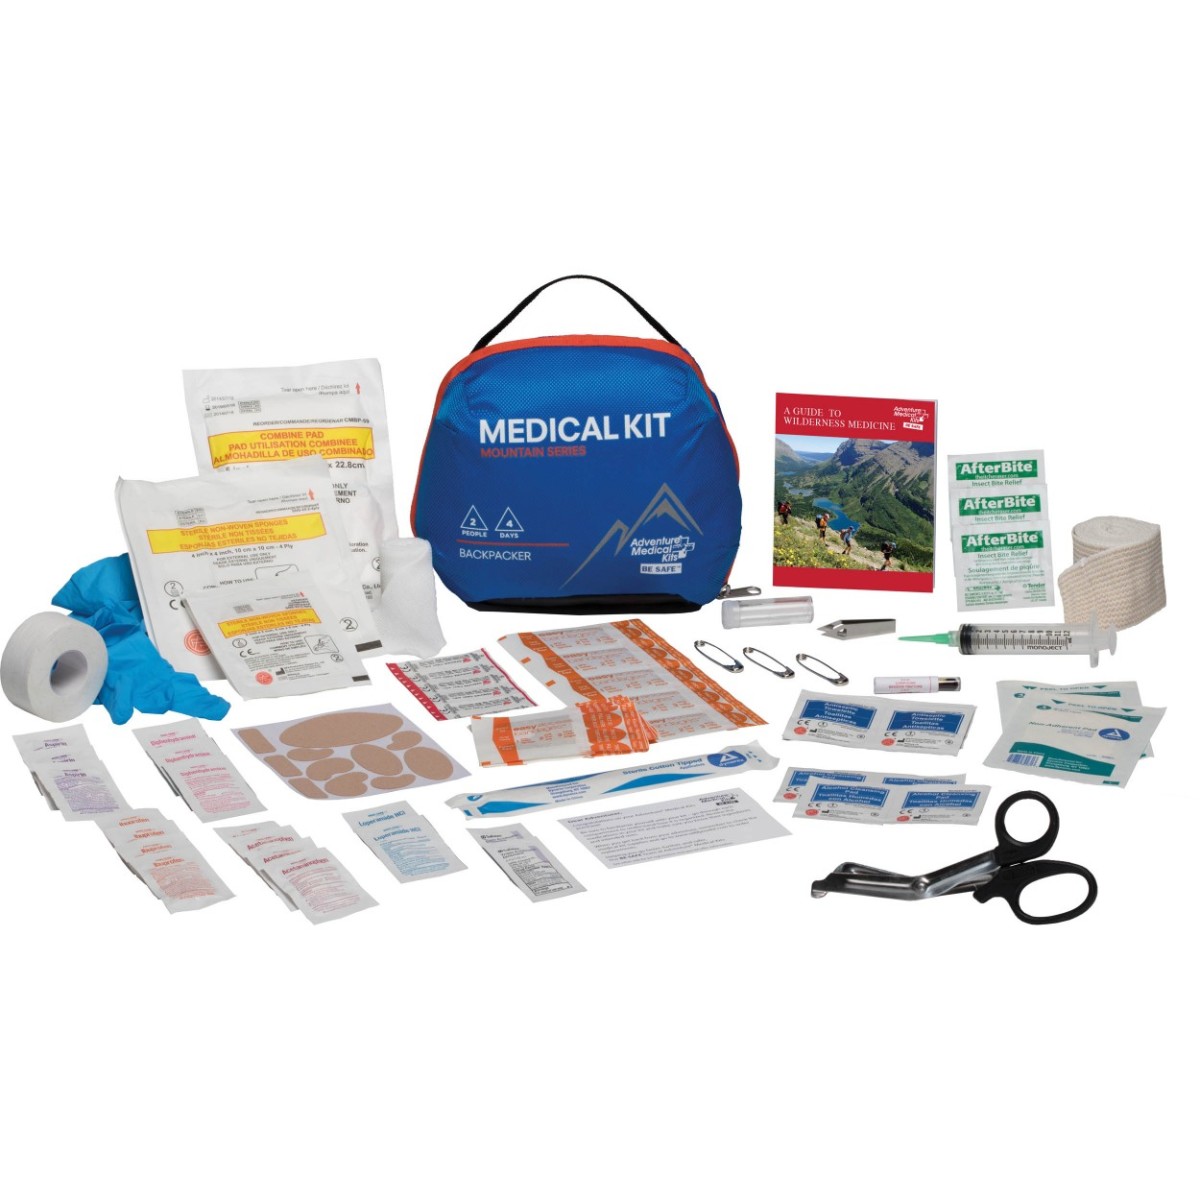 Adventure Medical Kits first aid kit